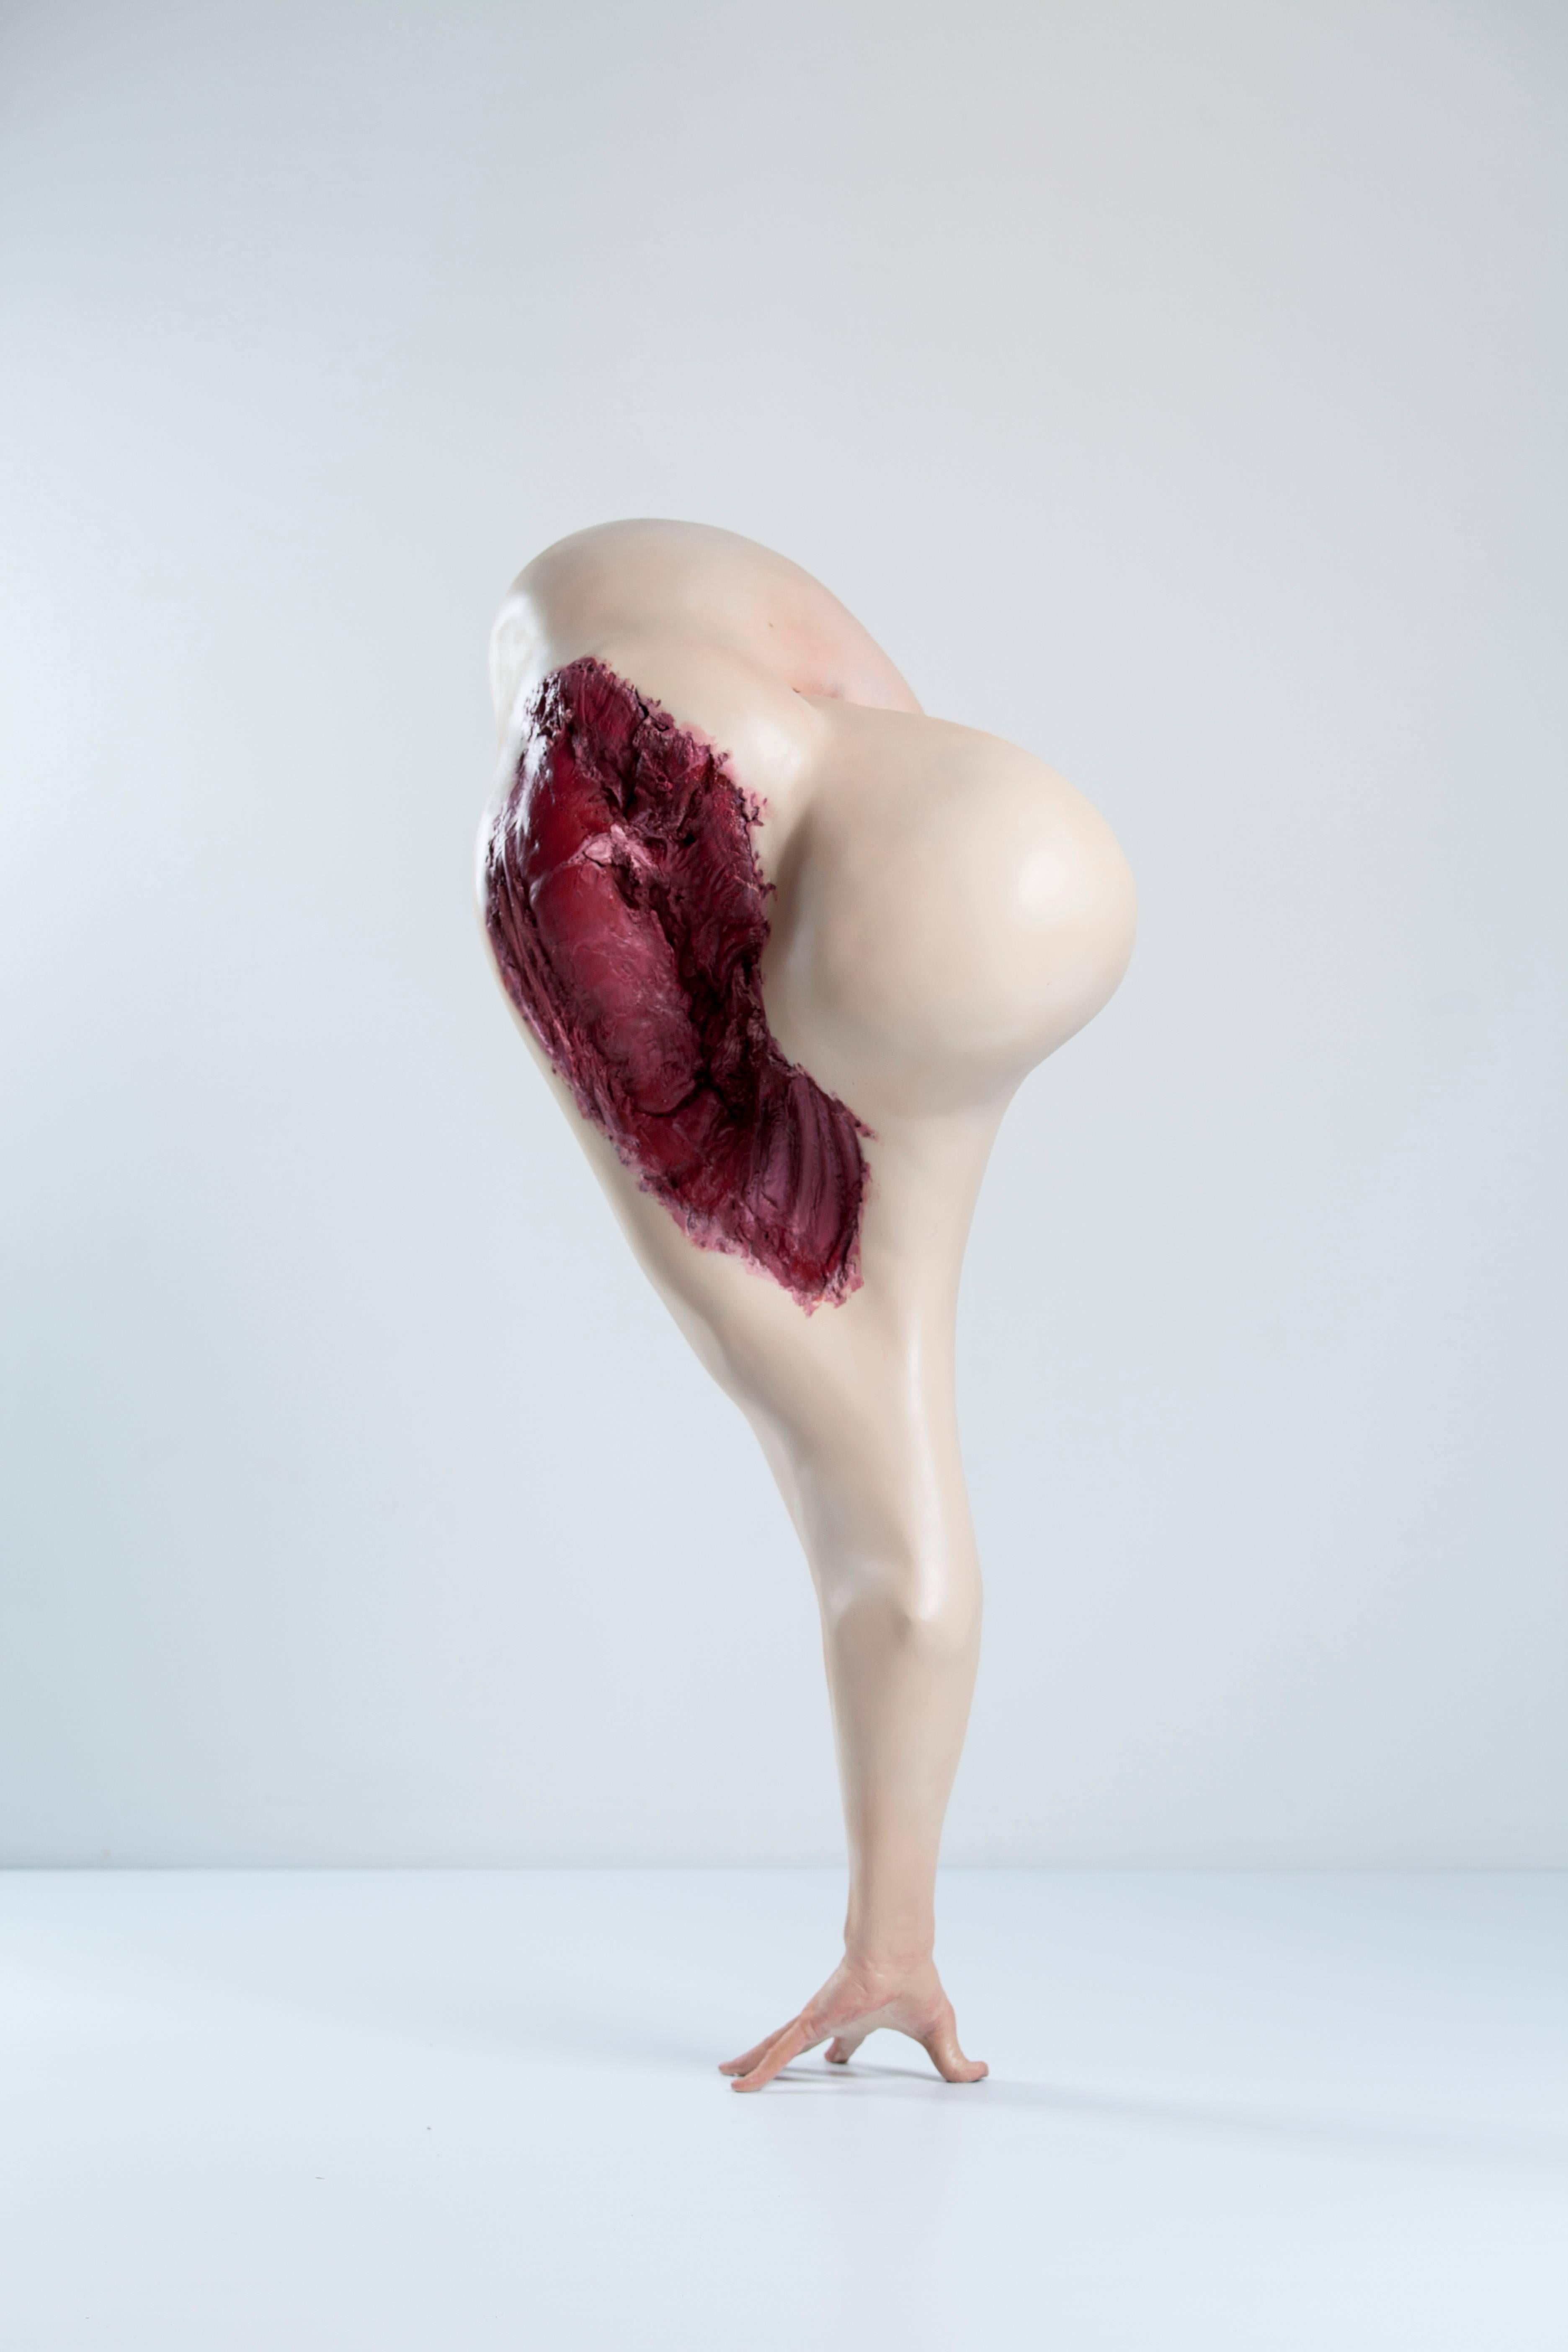 Smörgåsbot - Contemporary Sculpture by Bevan Ramsay